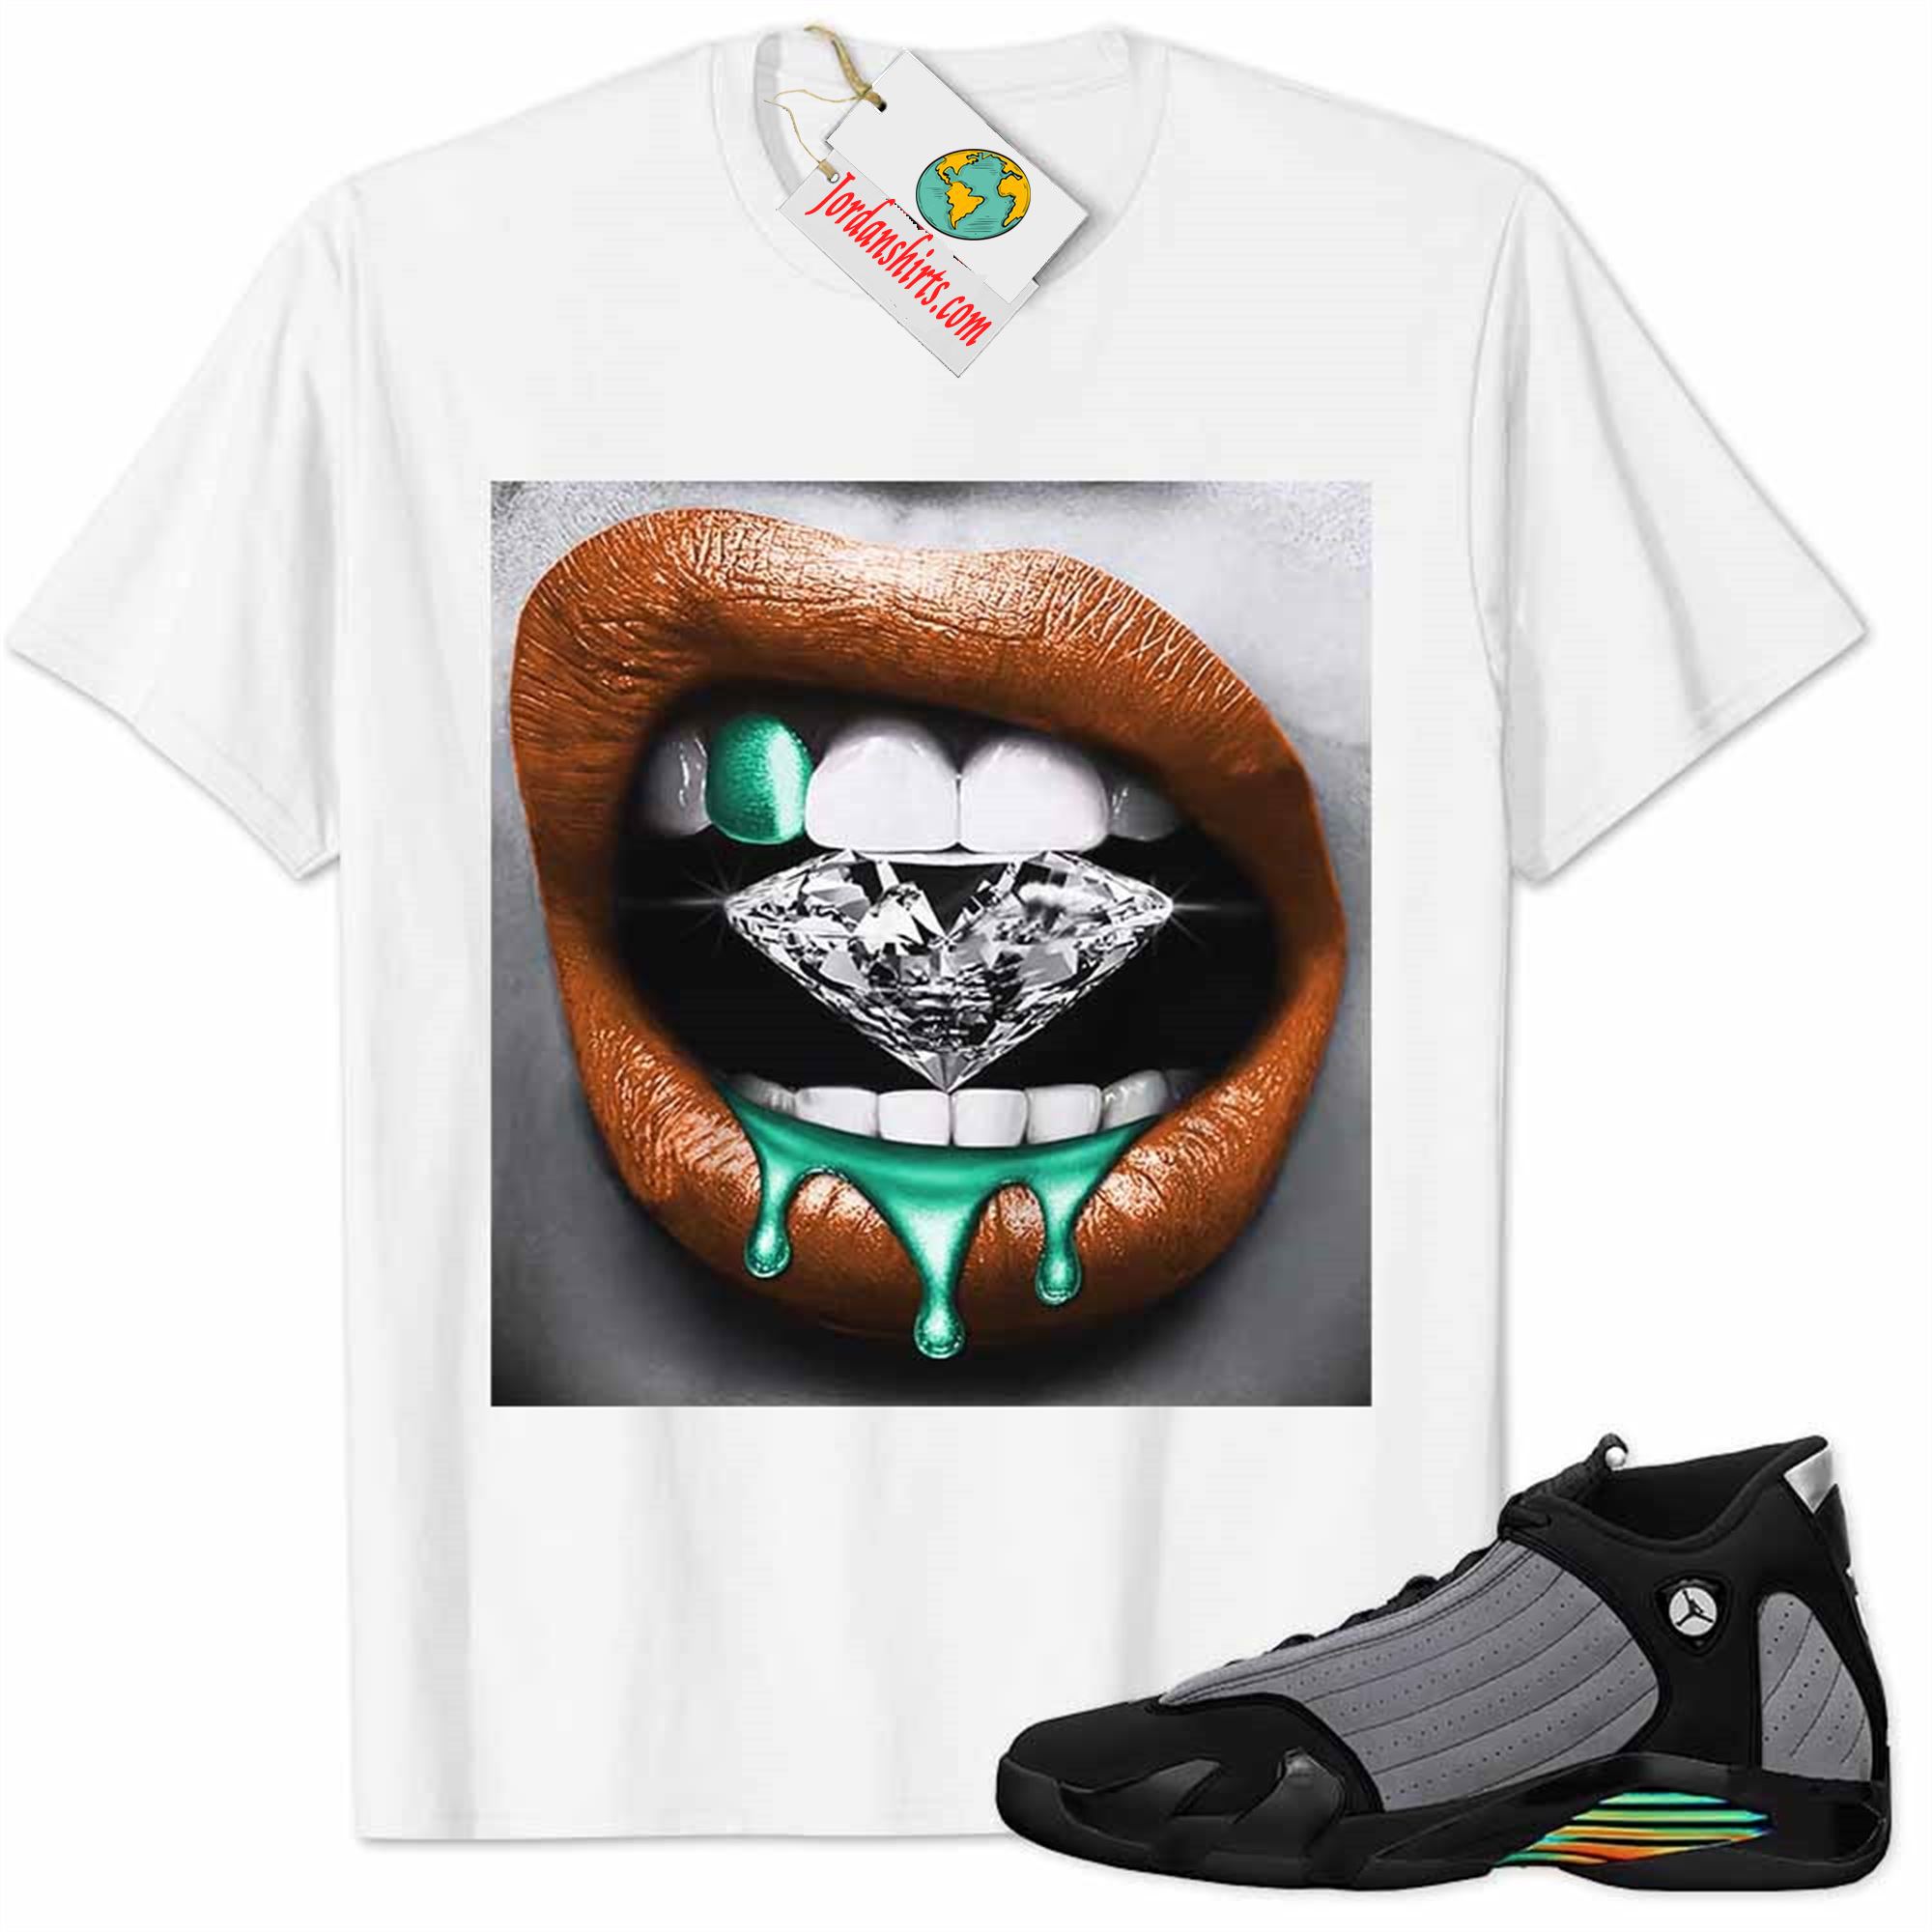 Jordan 14 Shirt, Jordan 14 Particle Grey Shirt Sexy Lip Bite Diamond Dripping White Size Up To 5xl